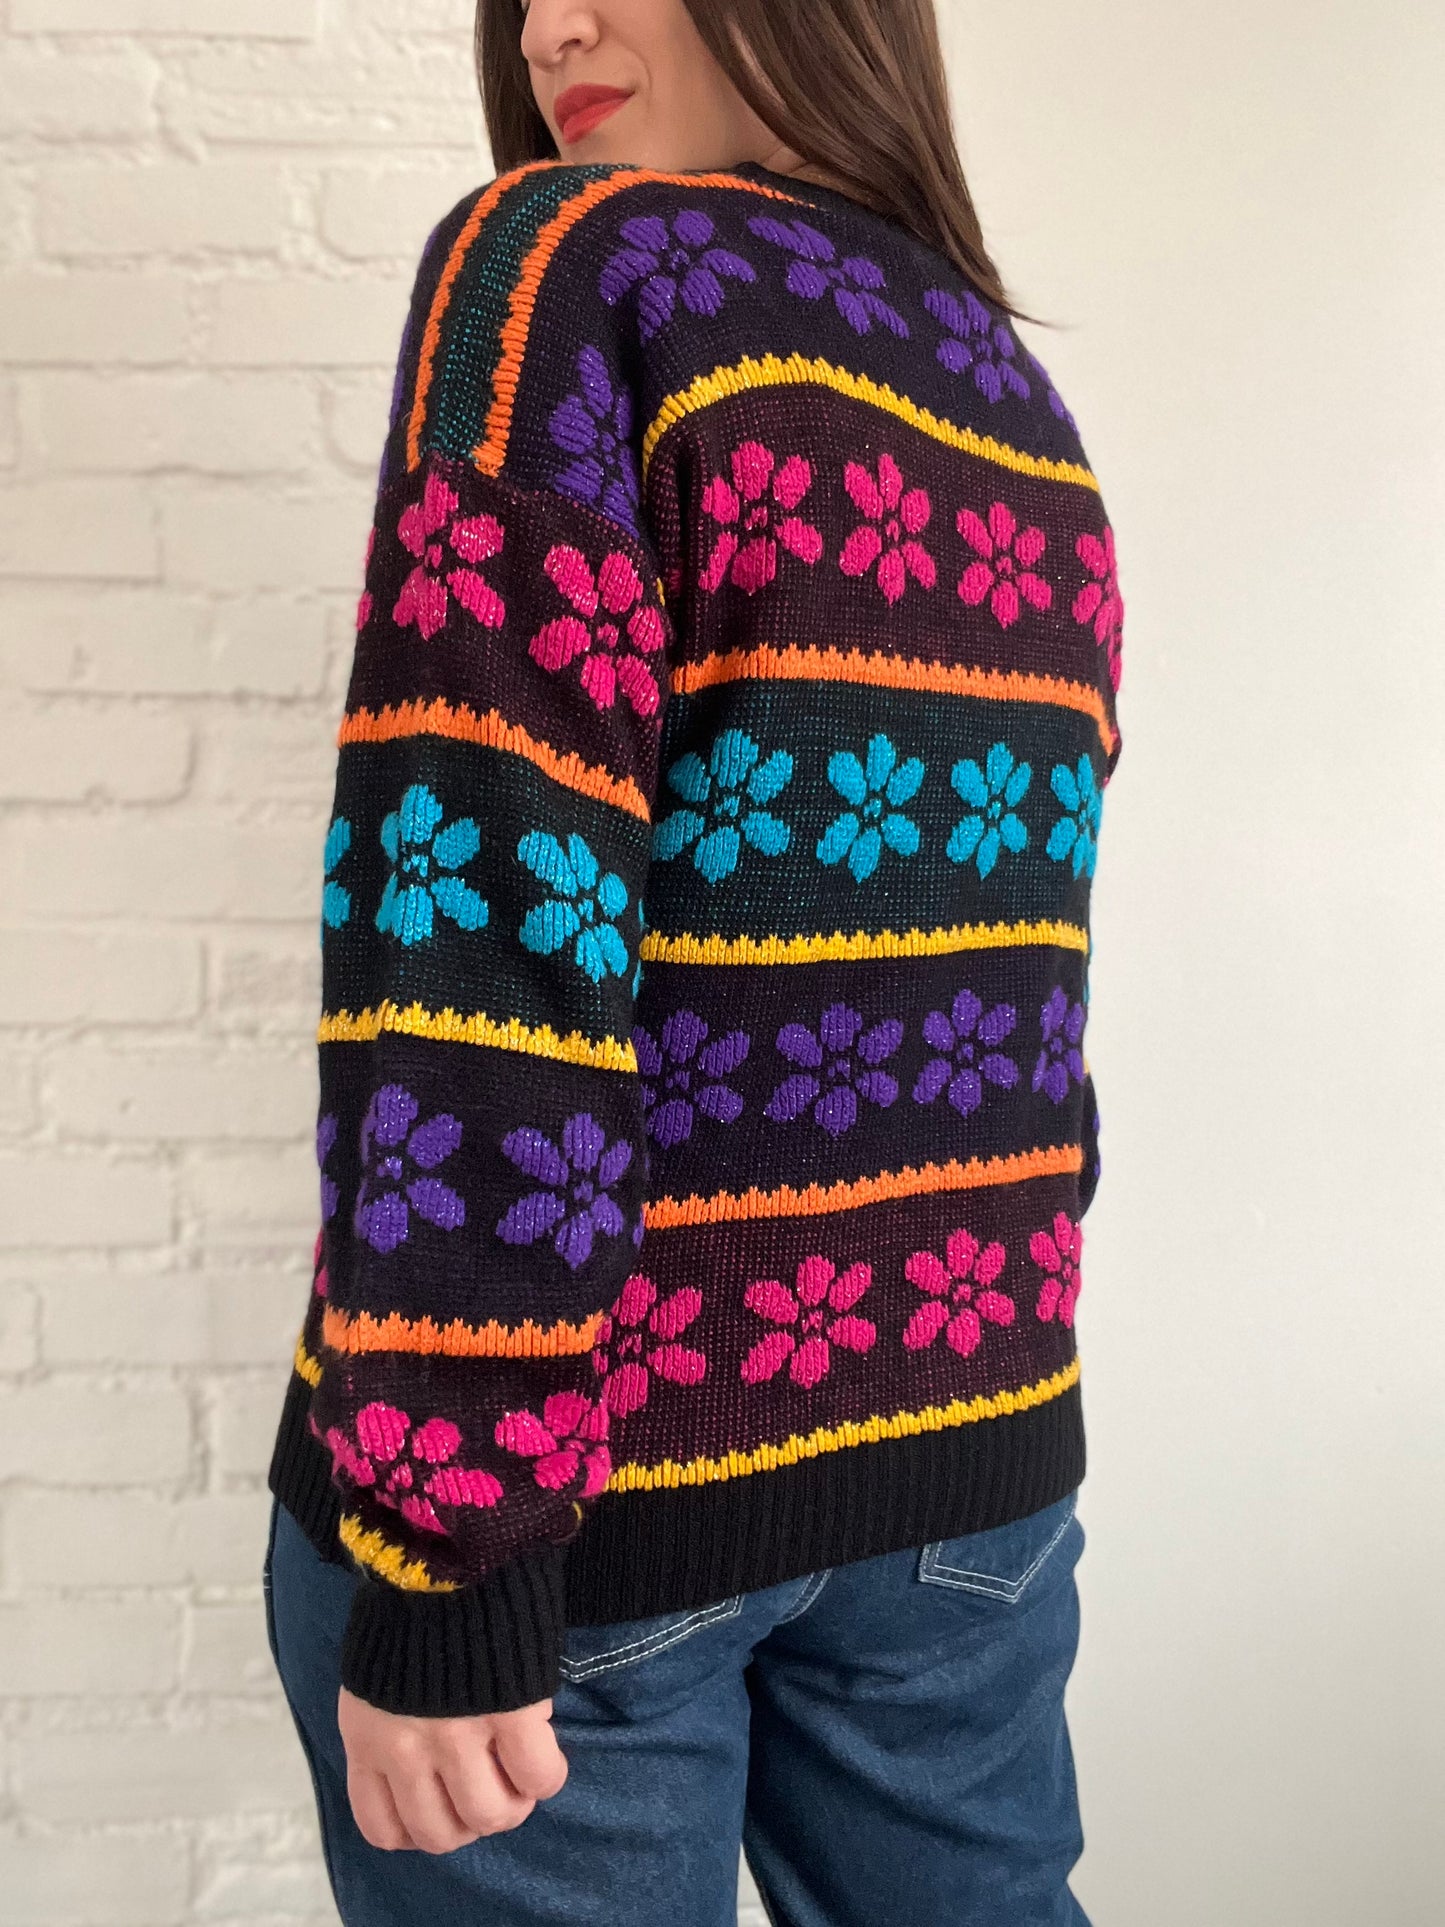 Metallic Floral Sweater - Size L